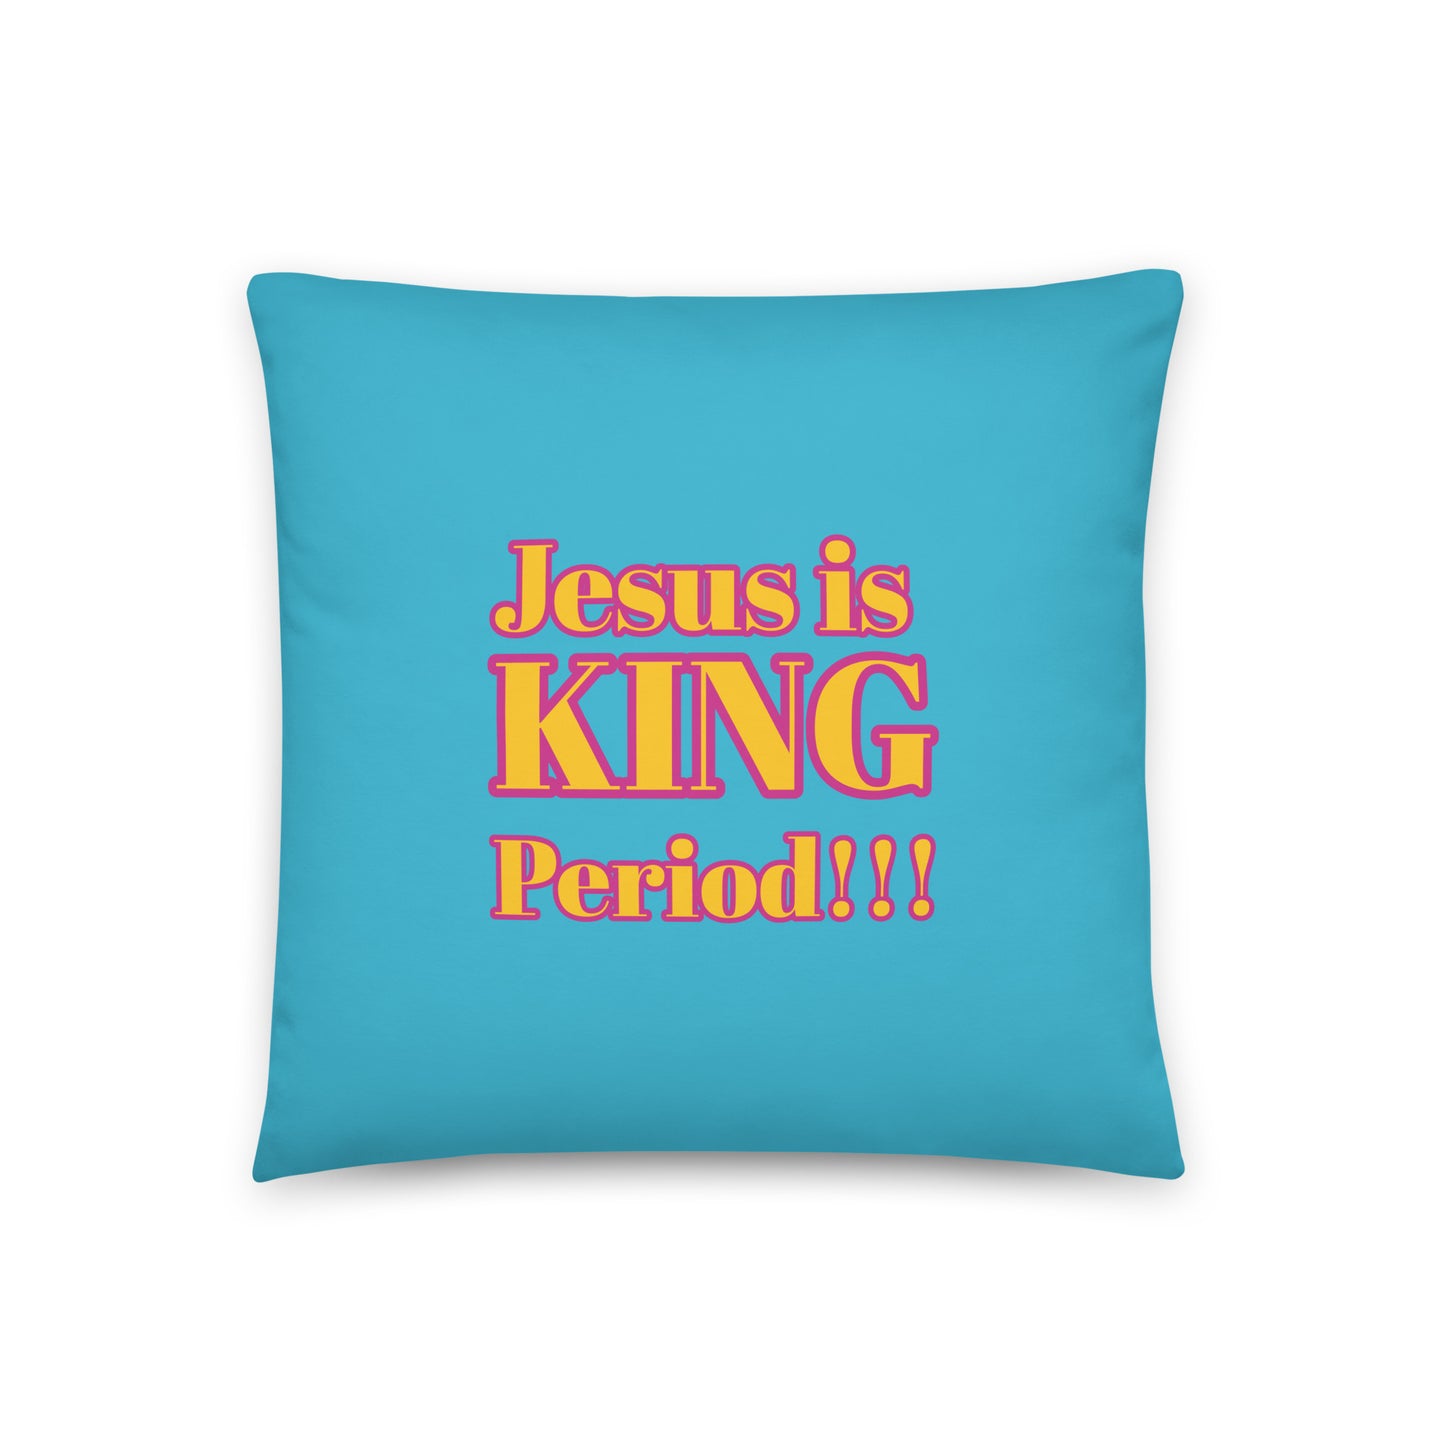 Jesus is King period!!! Basic Pillow